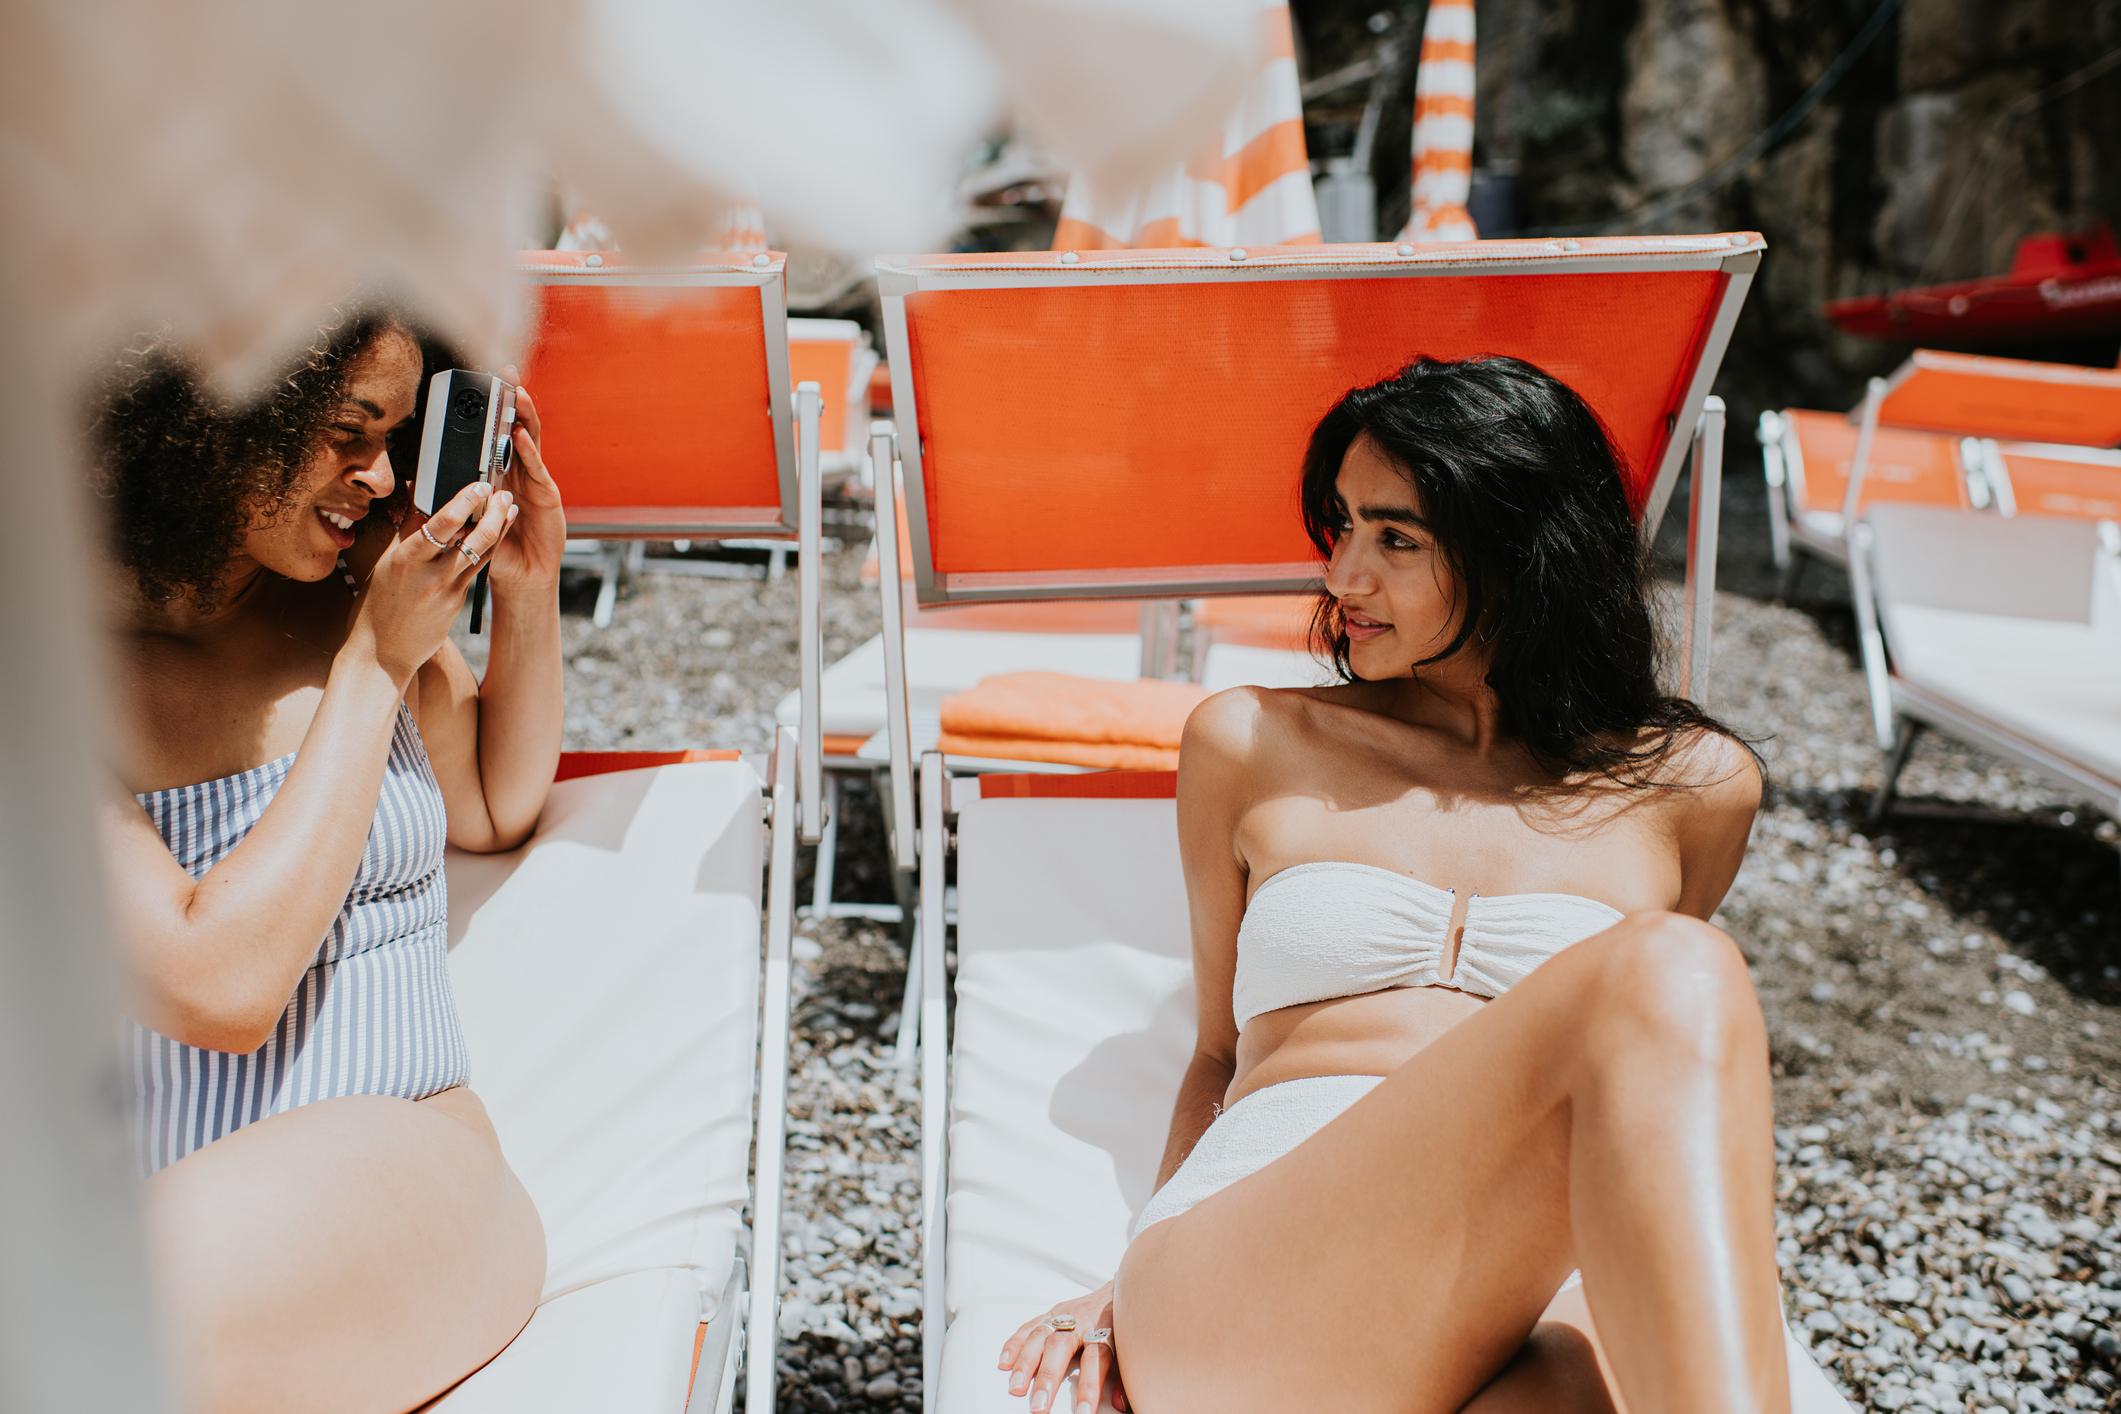 Girls on sunbathing chairs taking bikini photos